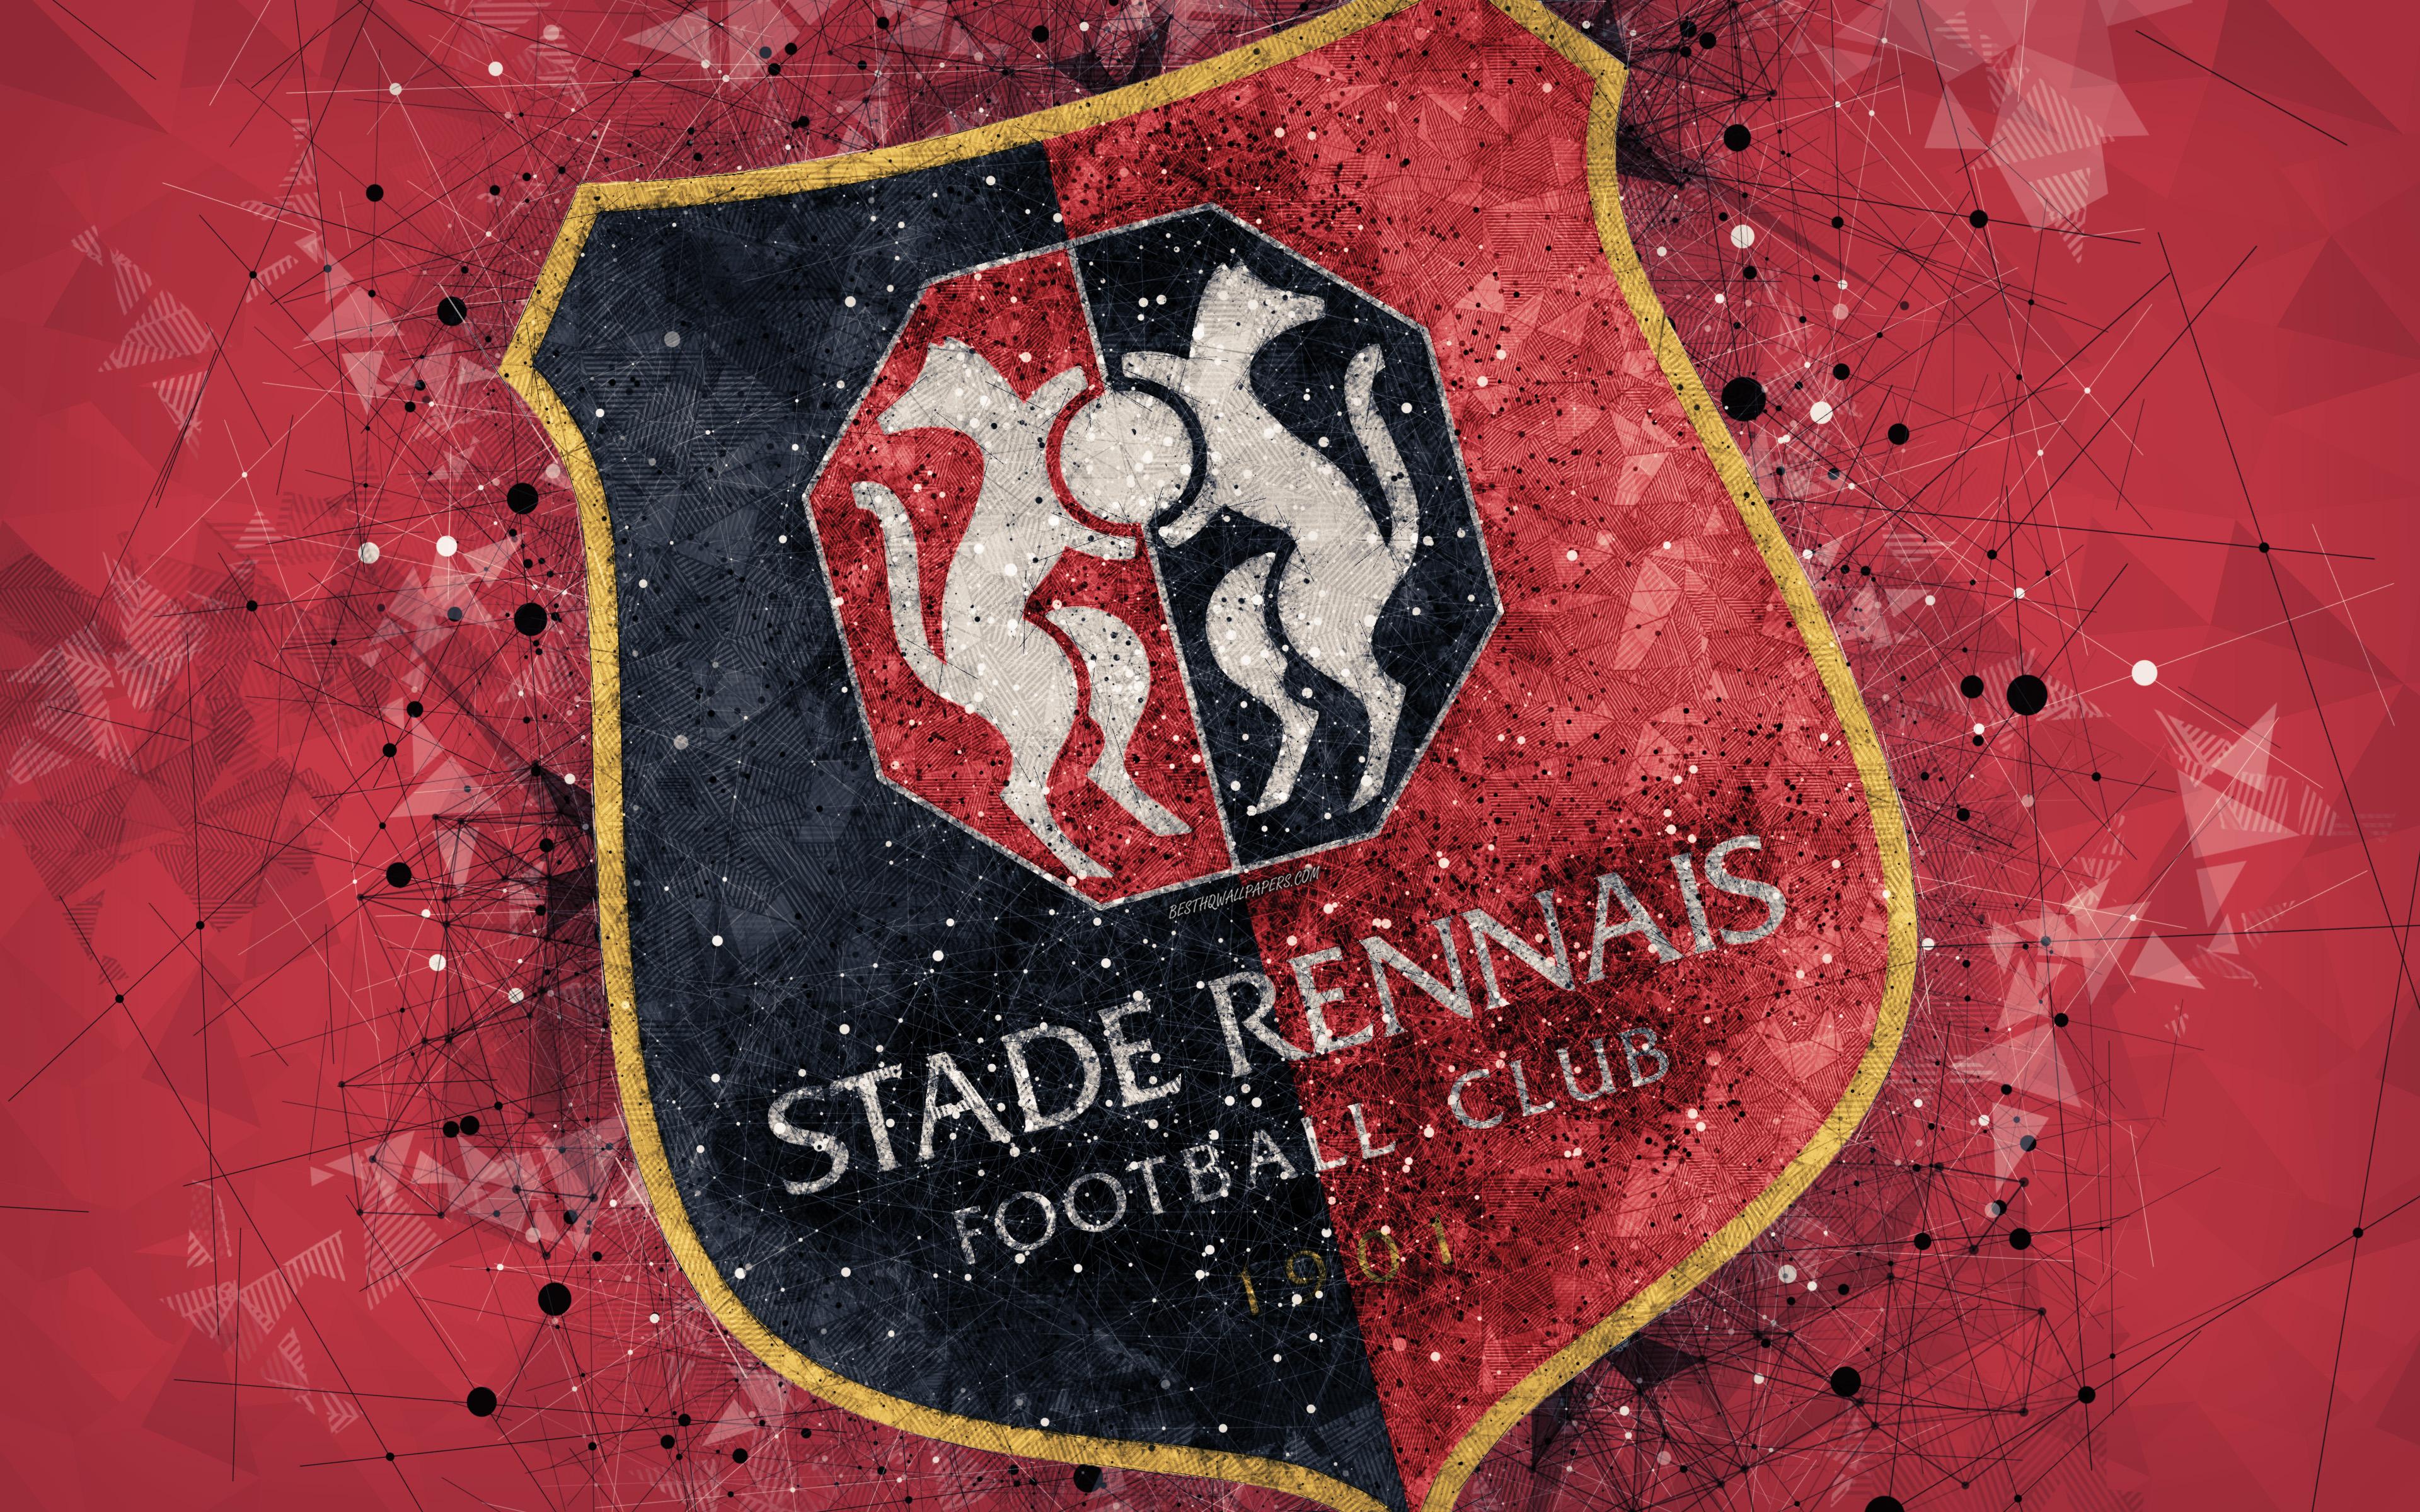 Download wallpaper Stade Rennais FC, 4k, geometric art, French